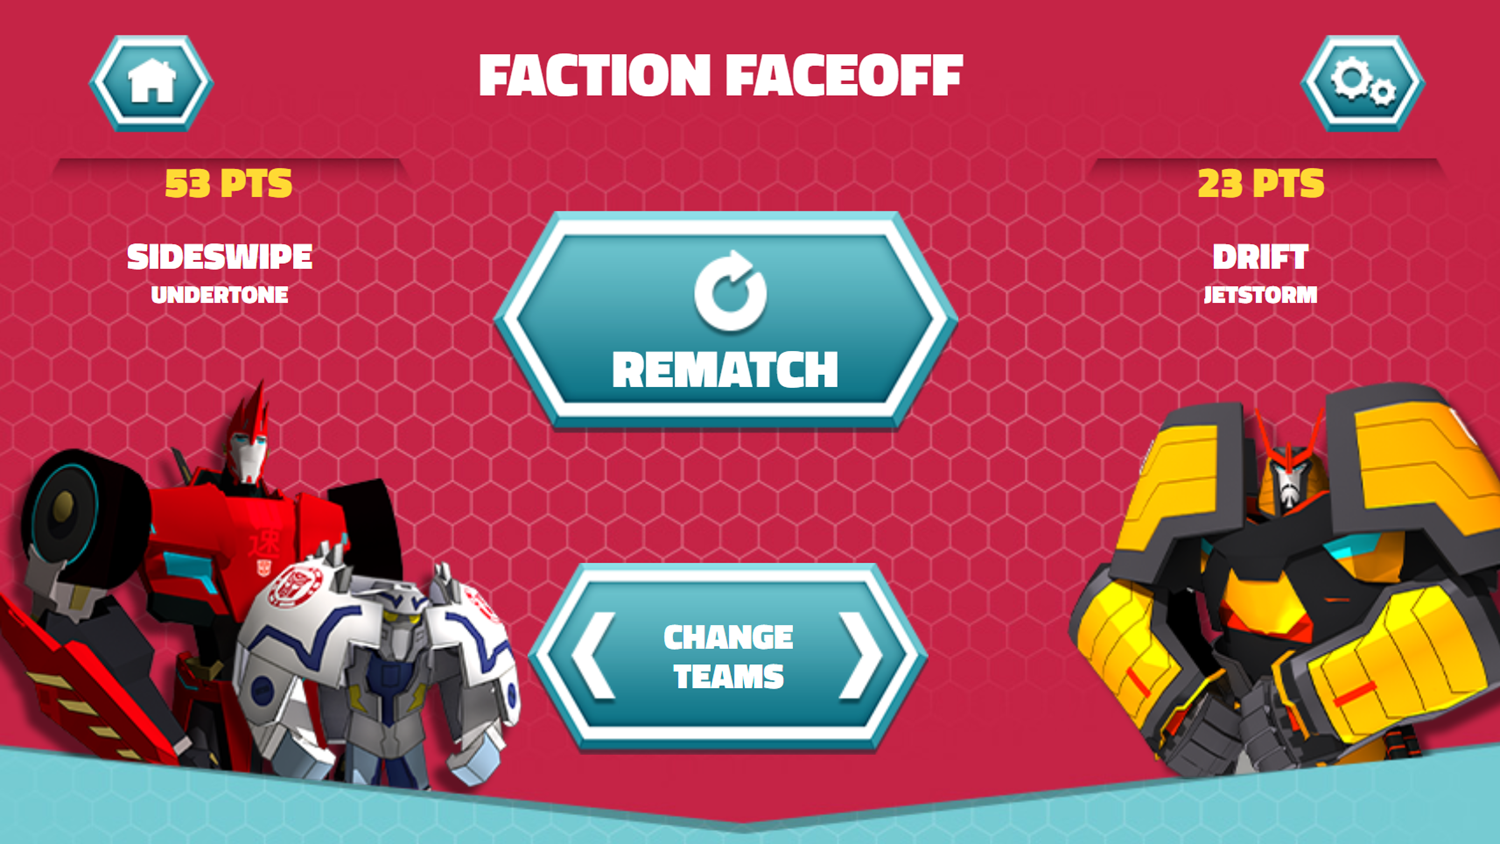 Transformers Faction Face Off Game Score Screenshot.